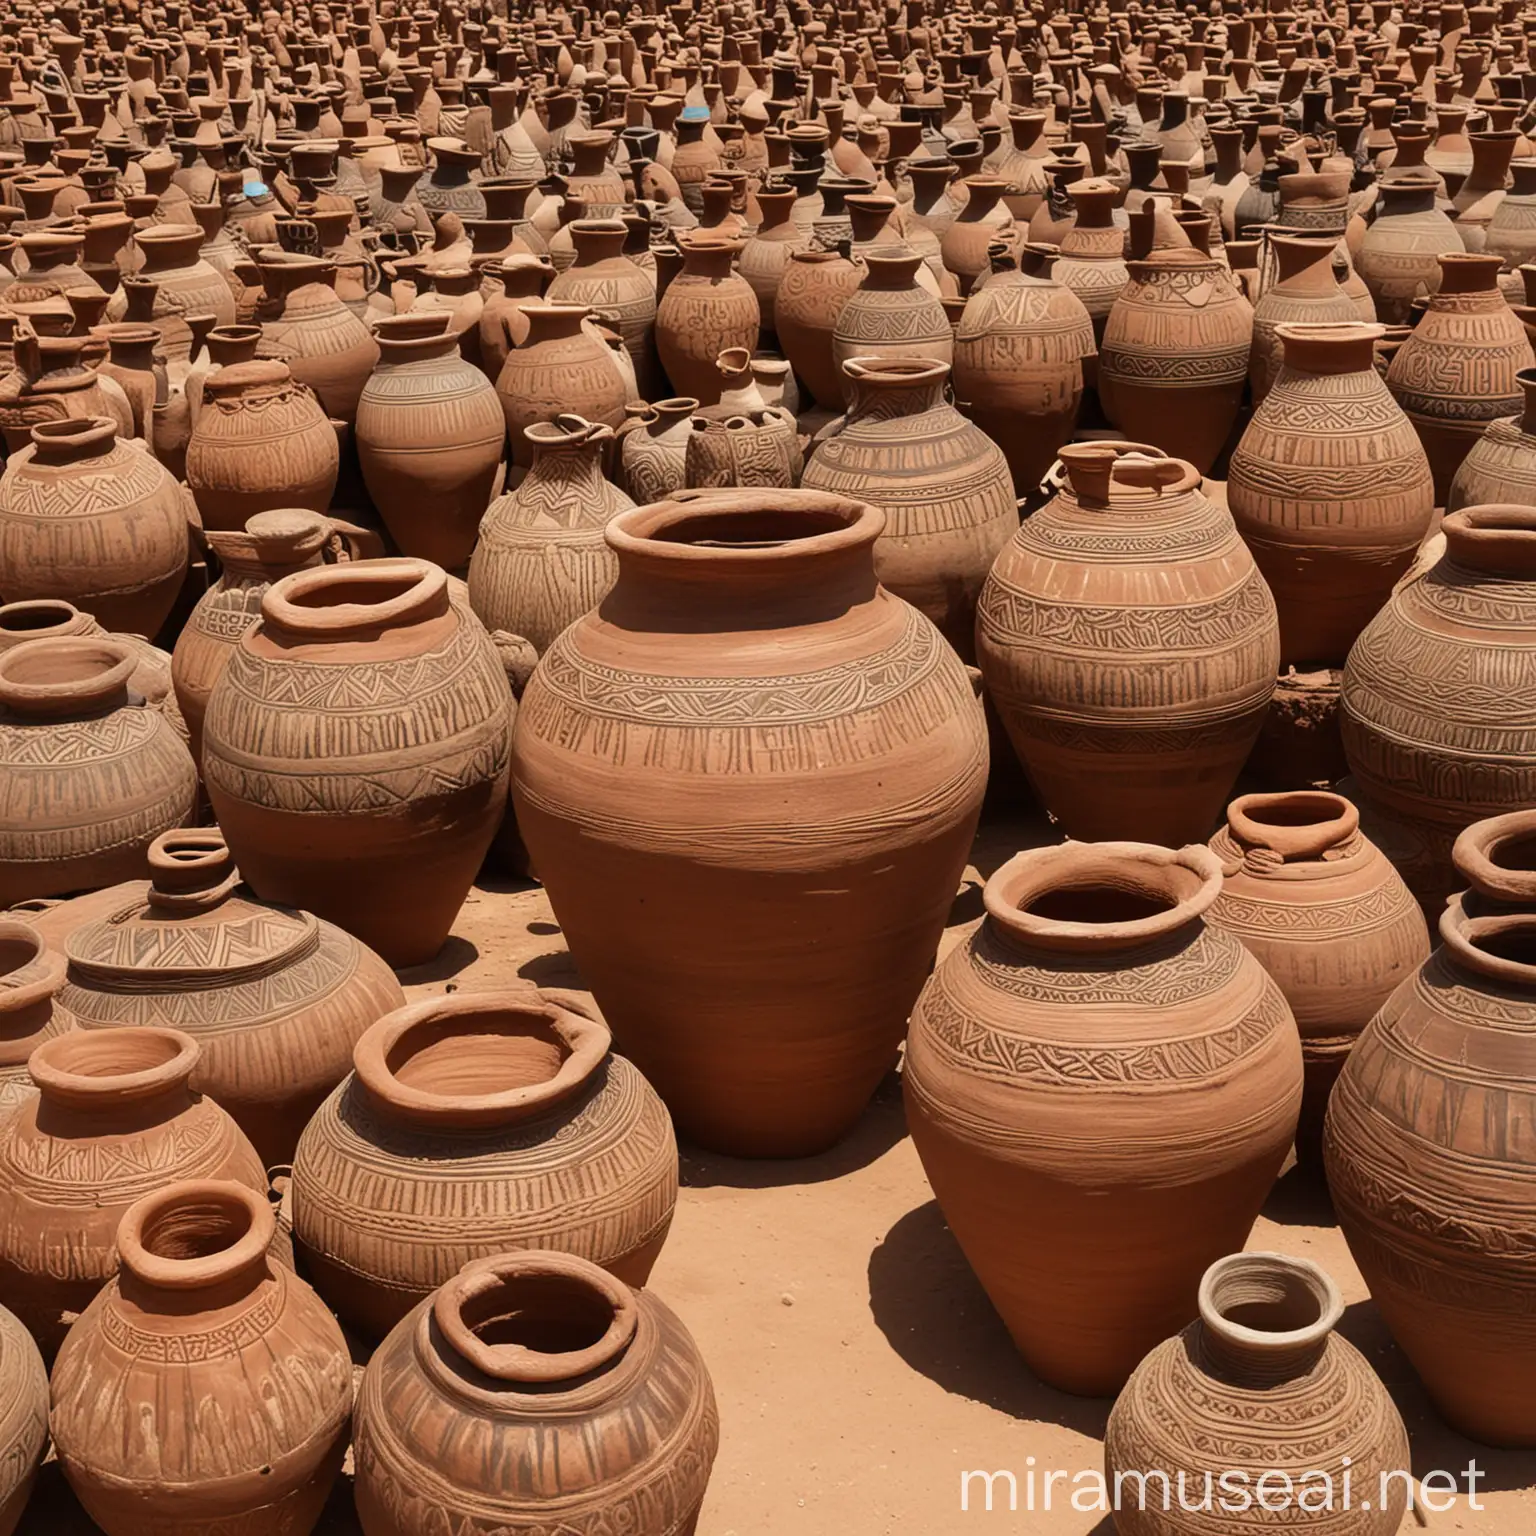 Vibrant African Pottery Craftsmanship Display